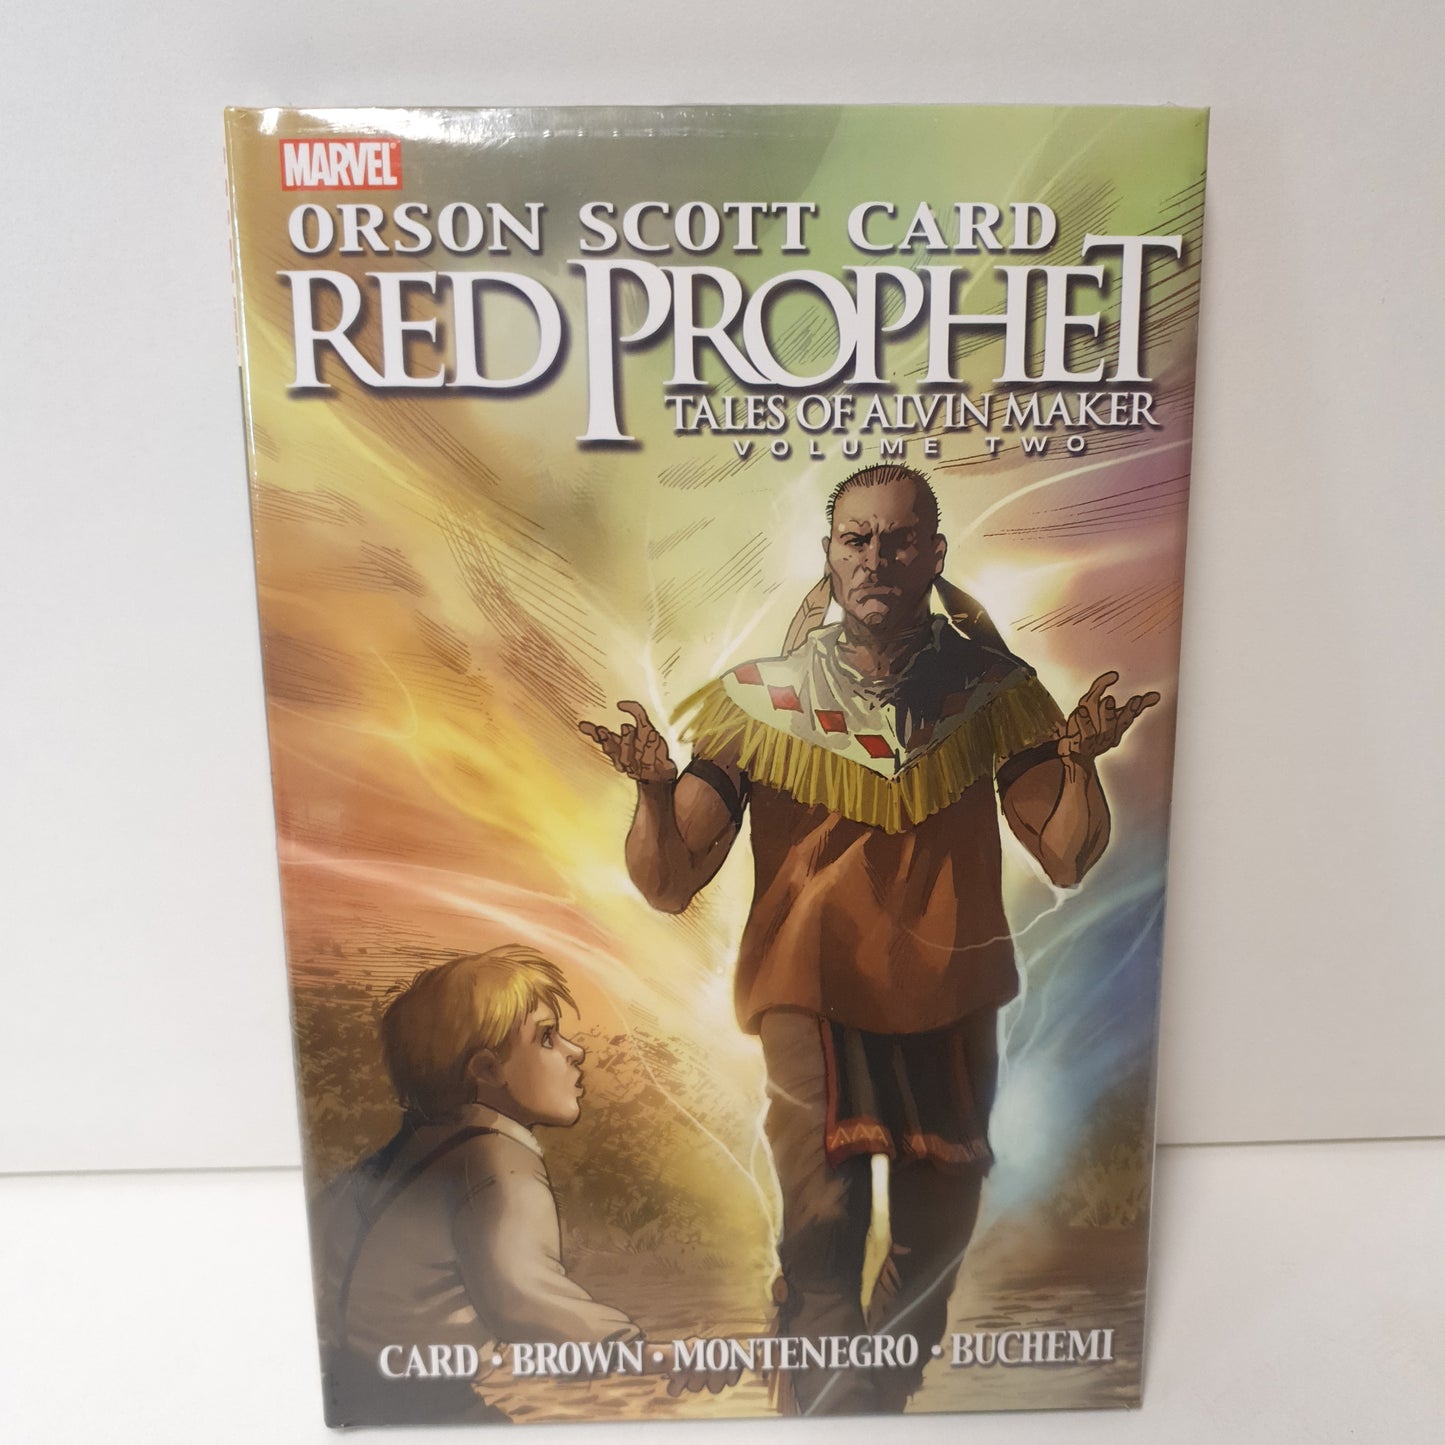 Red Prophet Tales of Alvin Maker Vol 2 by Orson Scott Card